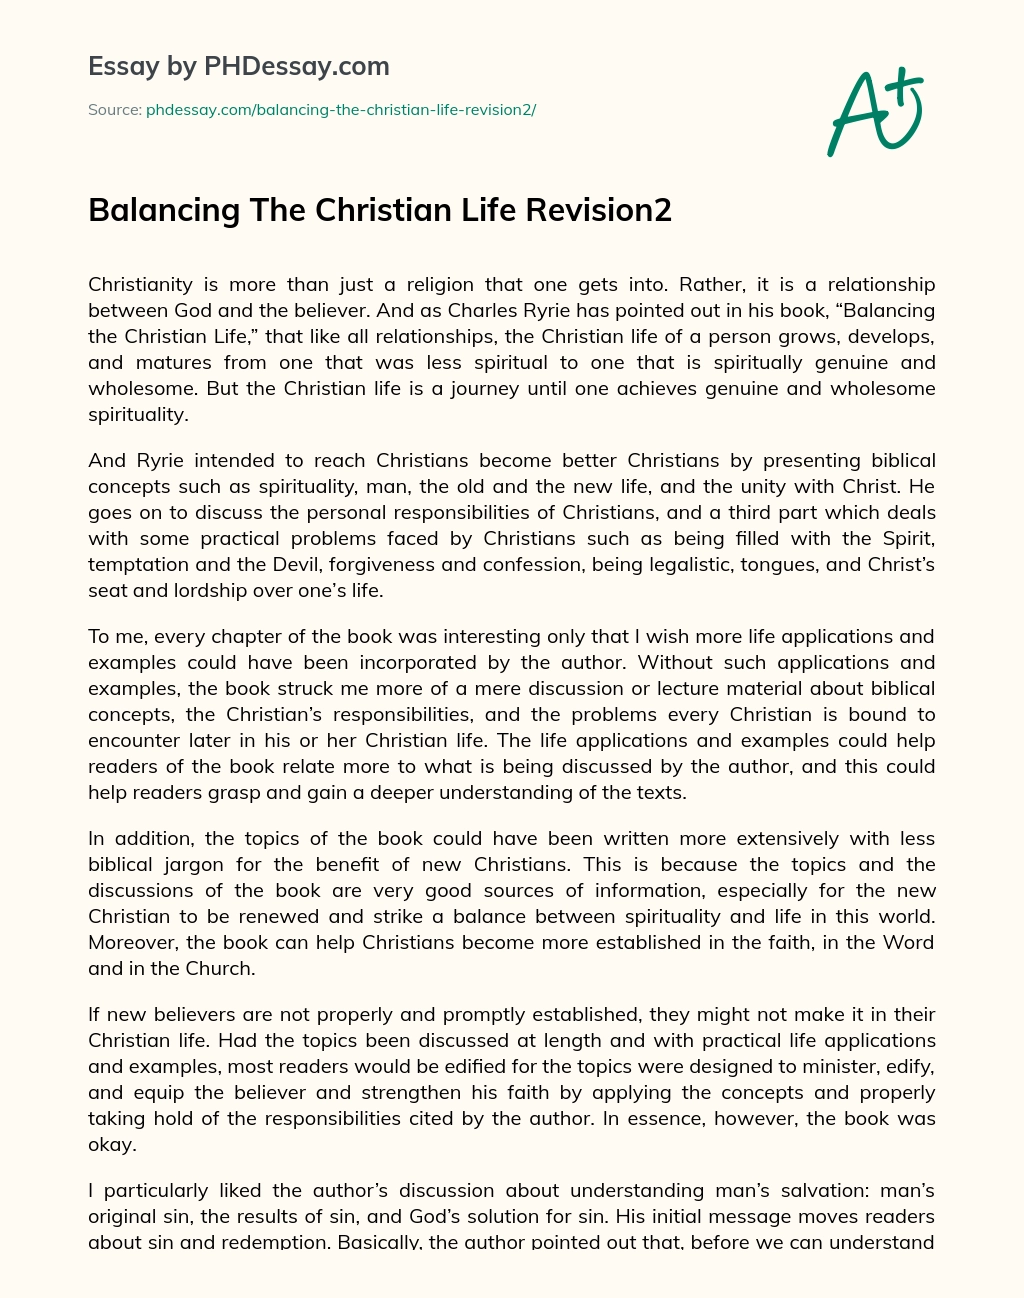 Balancing The Christian Life Revision2 essay